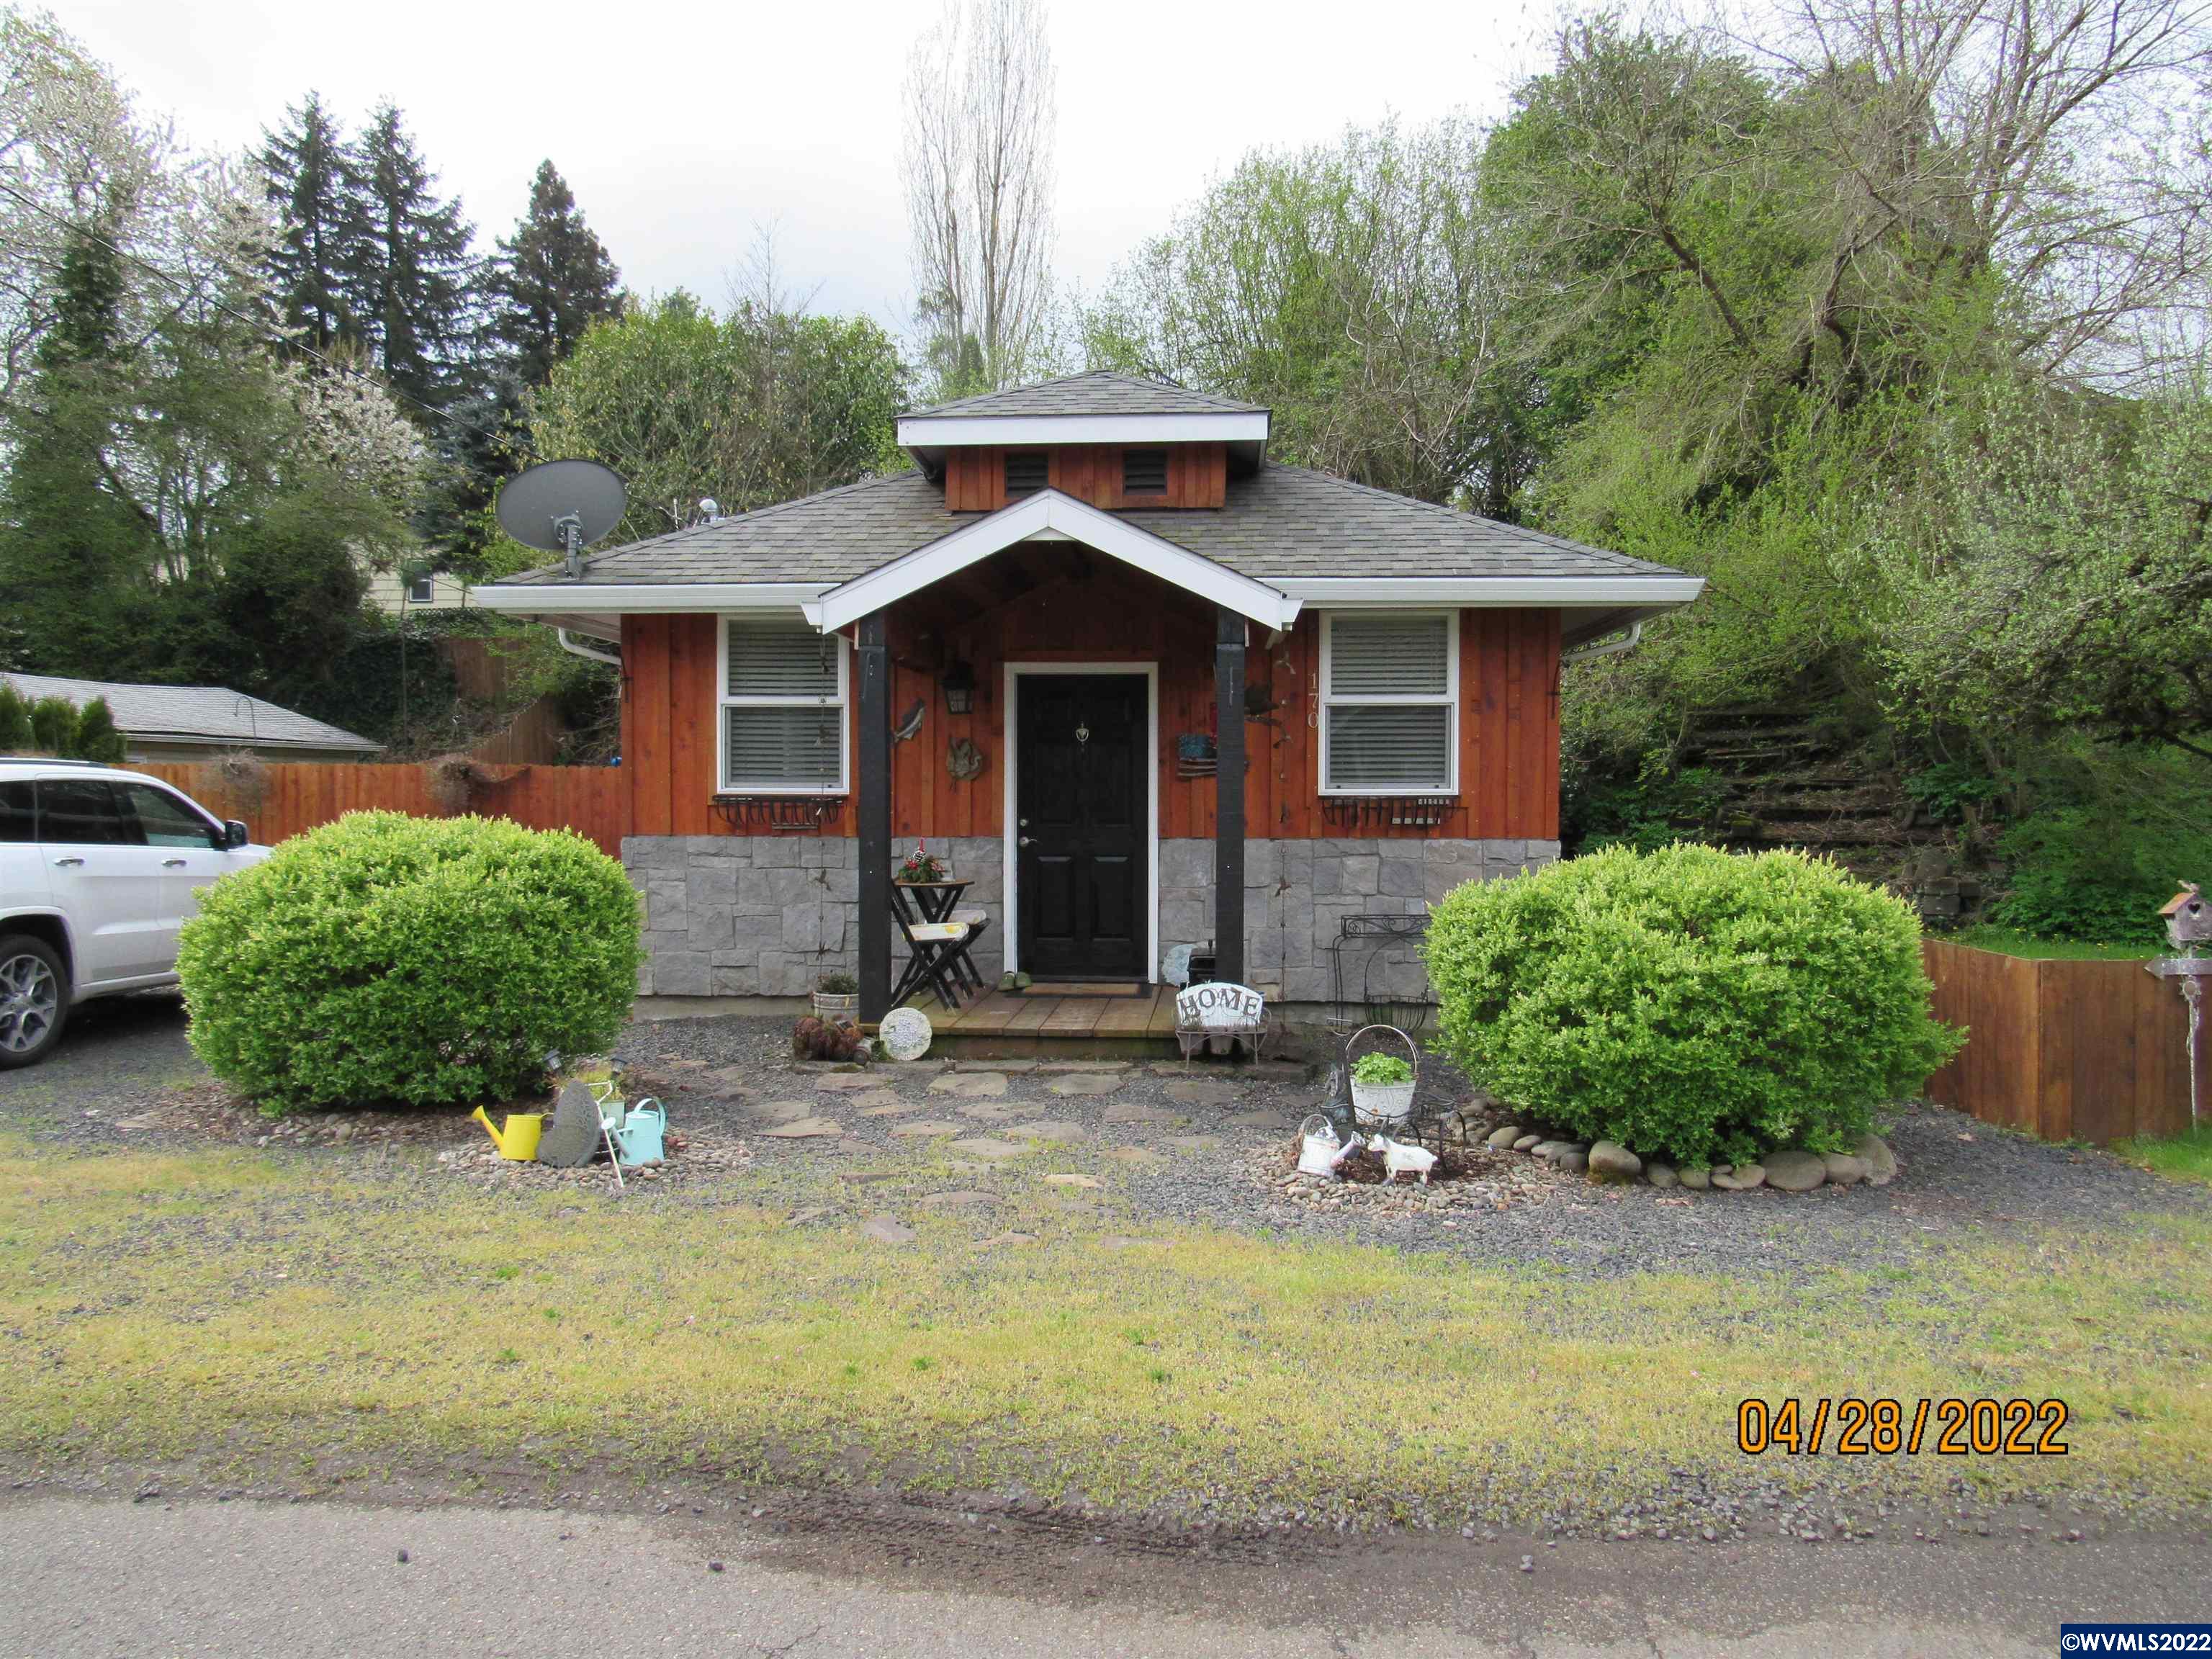 170 SE Hazel St, Mill City, Oregon 97360, 1 Bedroom Bedrooms, ,1 BathroomBathrooms,Residence,For sale,170 SE Hazel St,791875